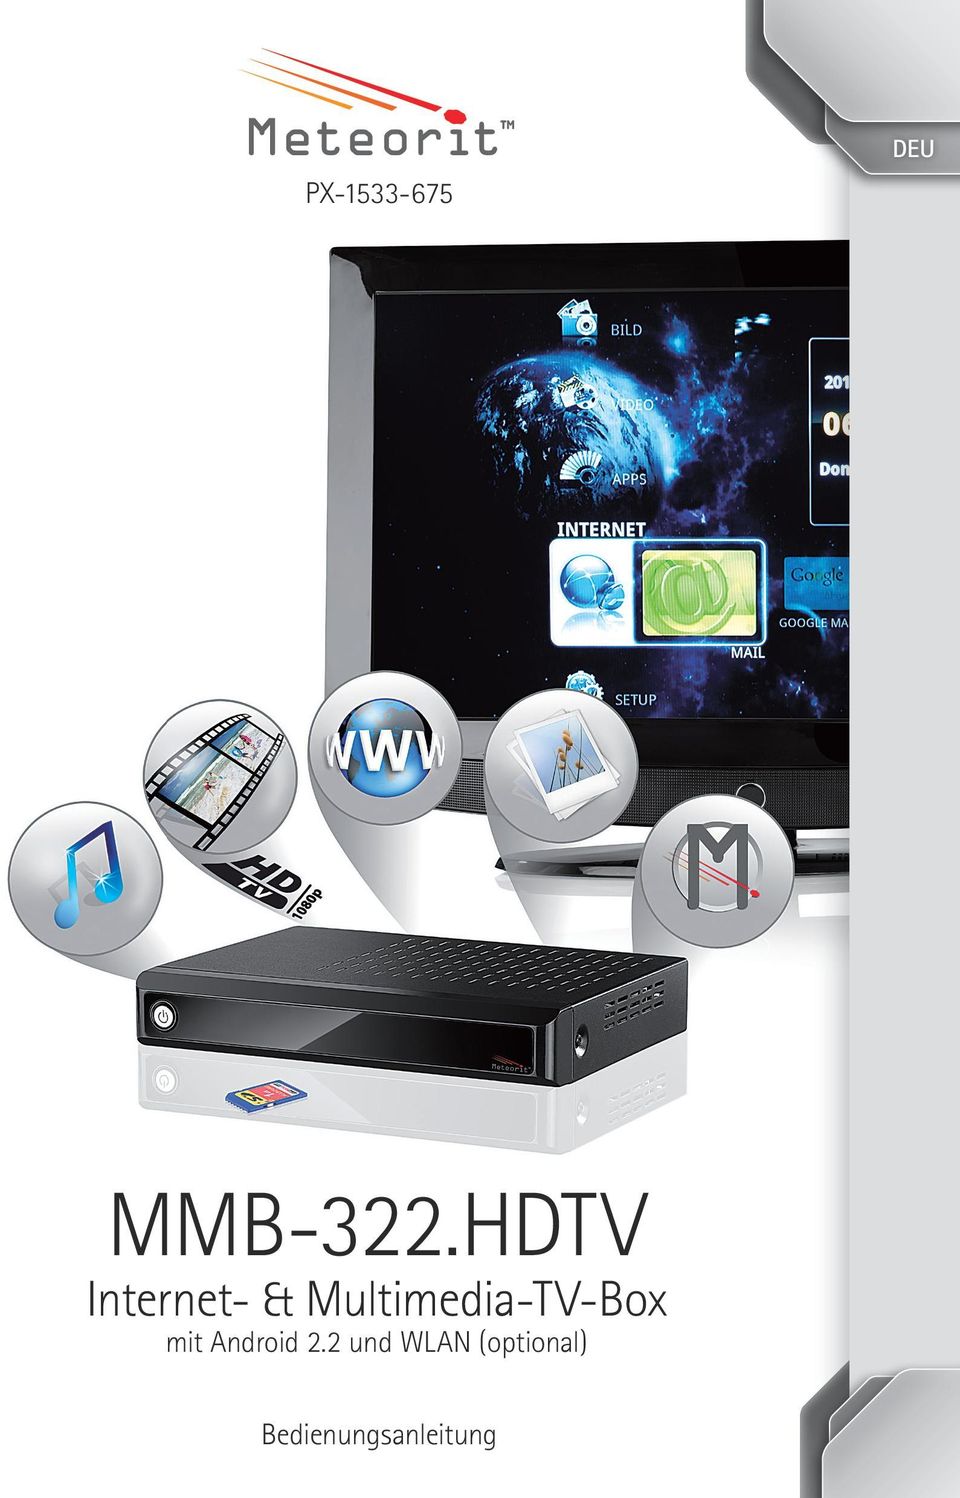 Multimedia-TV-Box mit